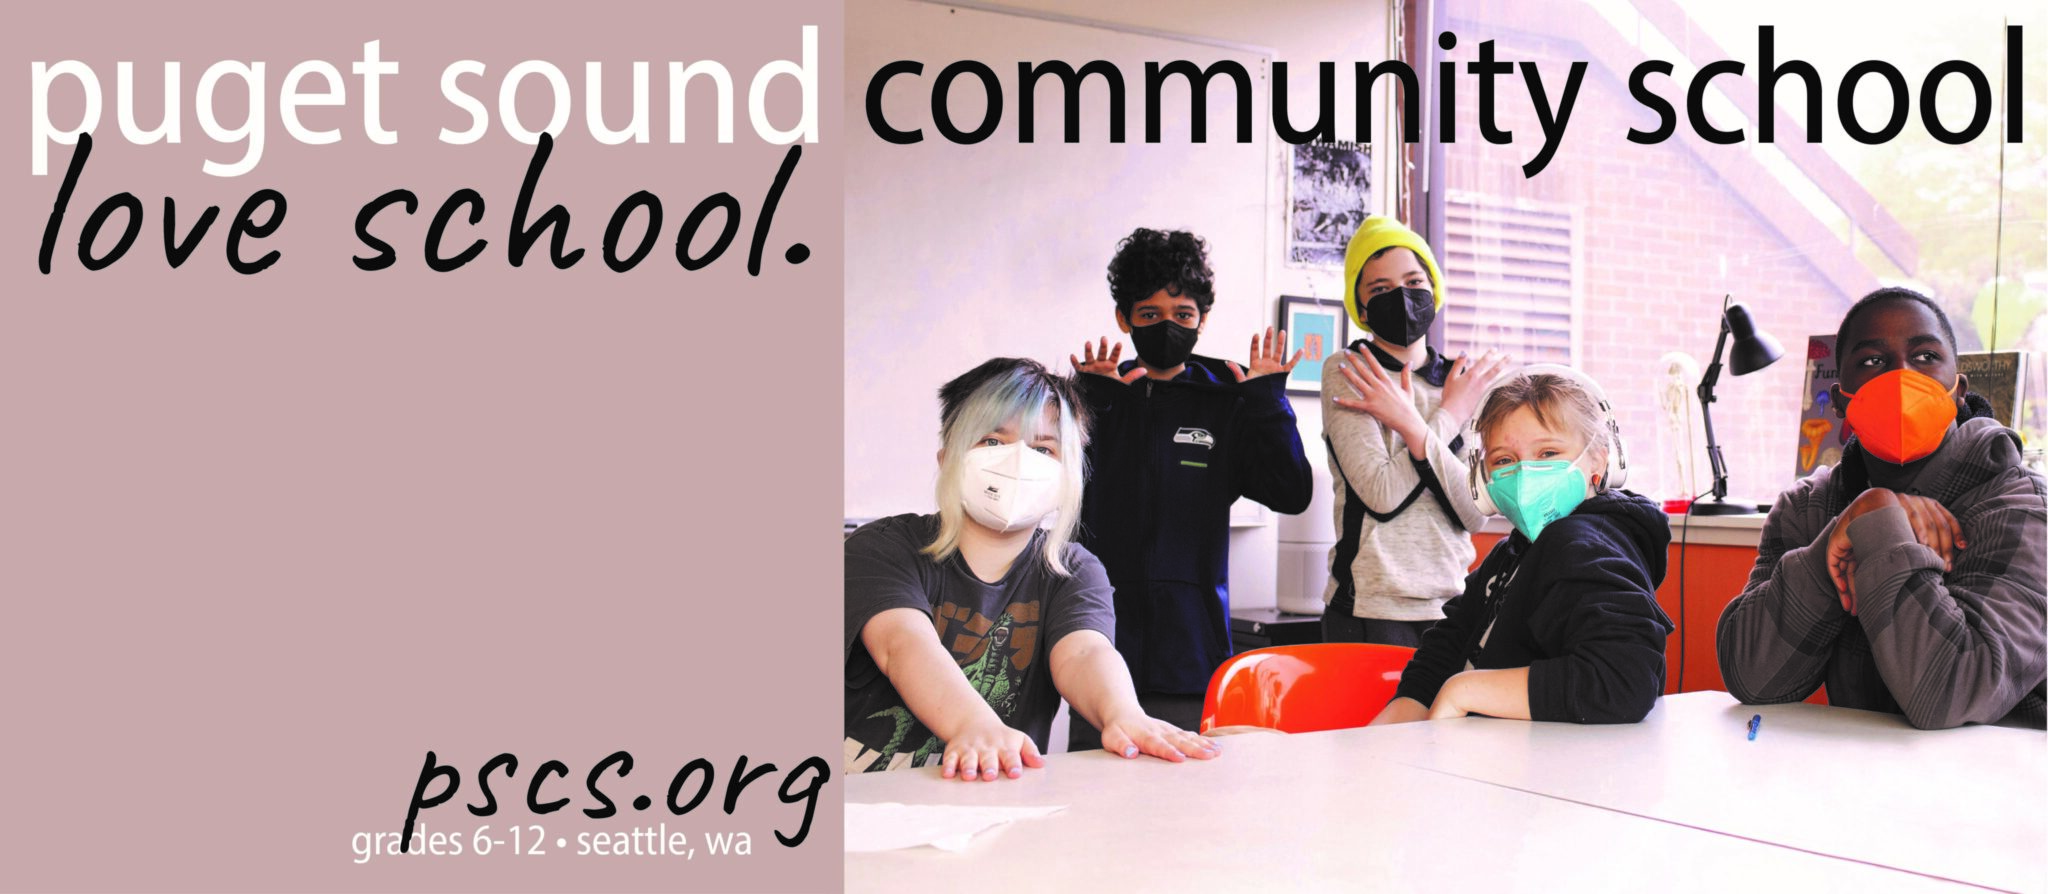 Puget Sound Community School 